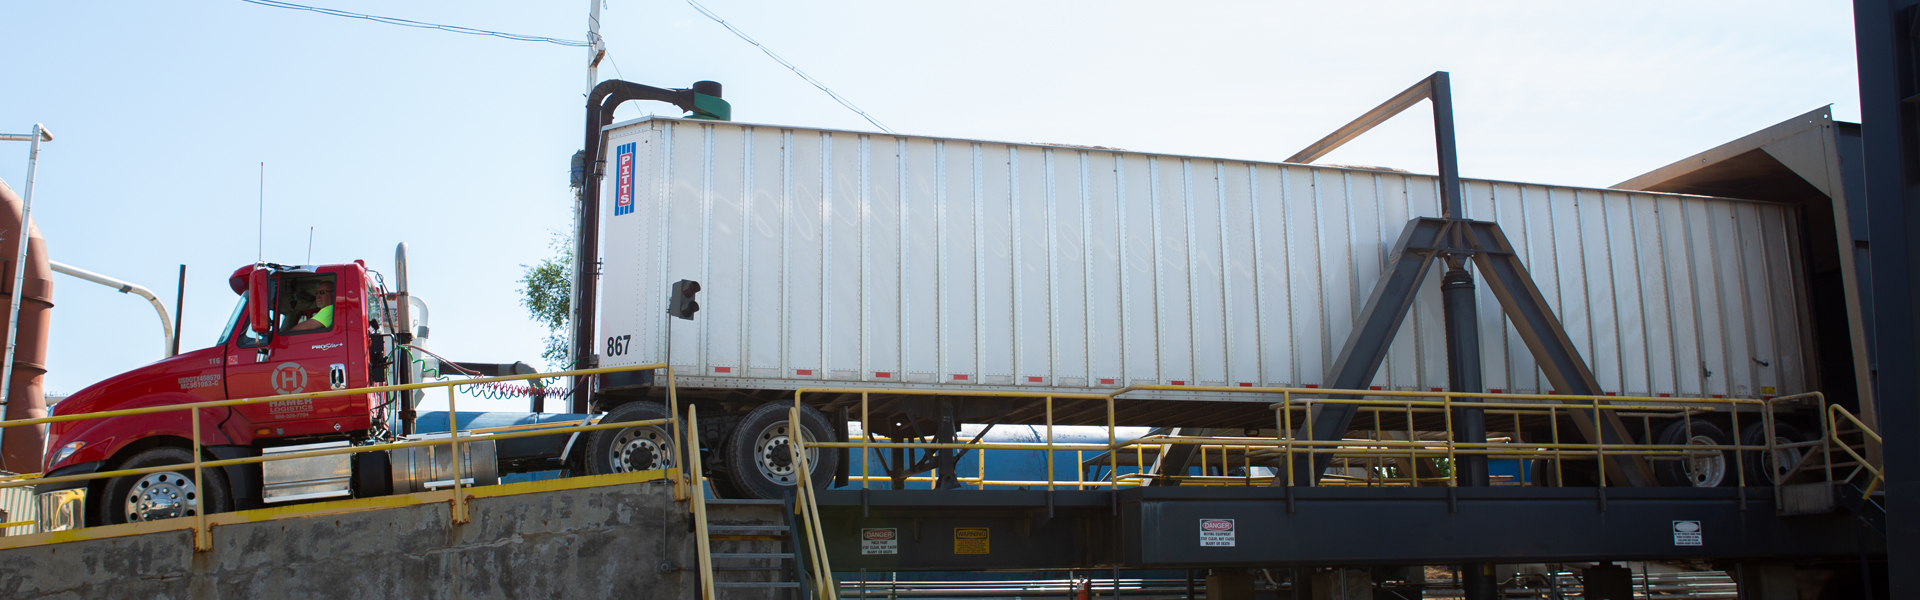 Truck on loading dock